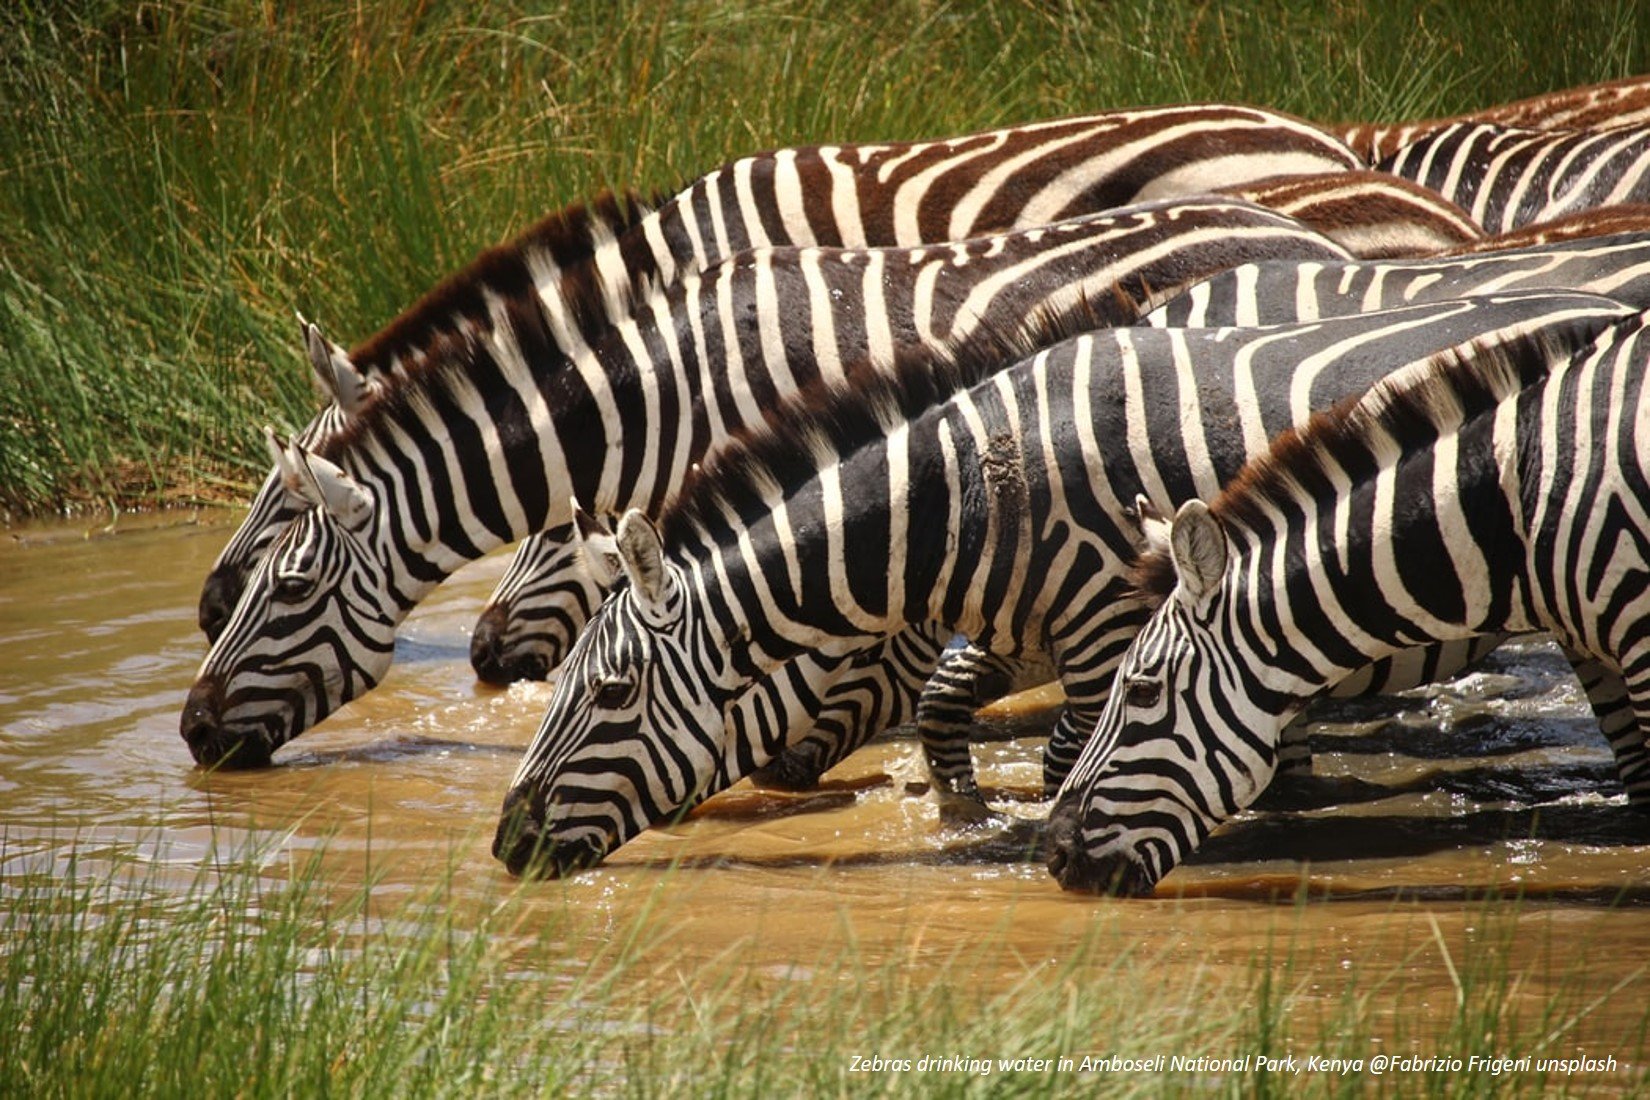 Zebras drinking water in Amboseli National Park by Fabrizio Frigeni/unsplash